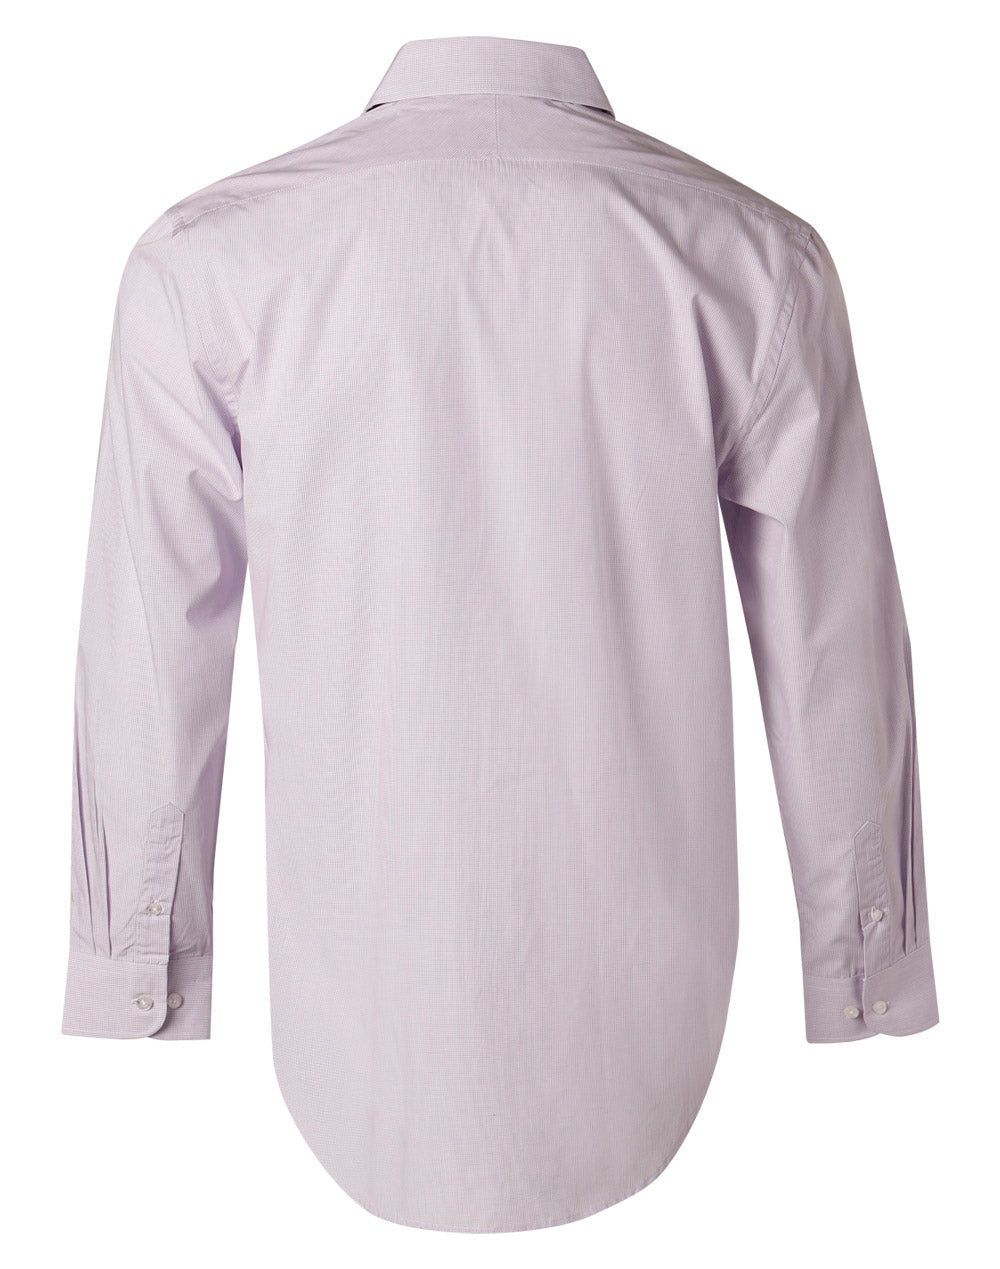 Winning Spirit-Men's Mini Check Long Sleeve Shirt -M7360L